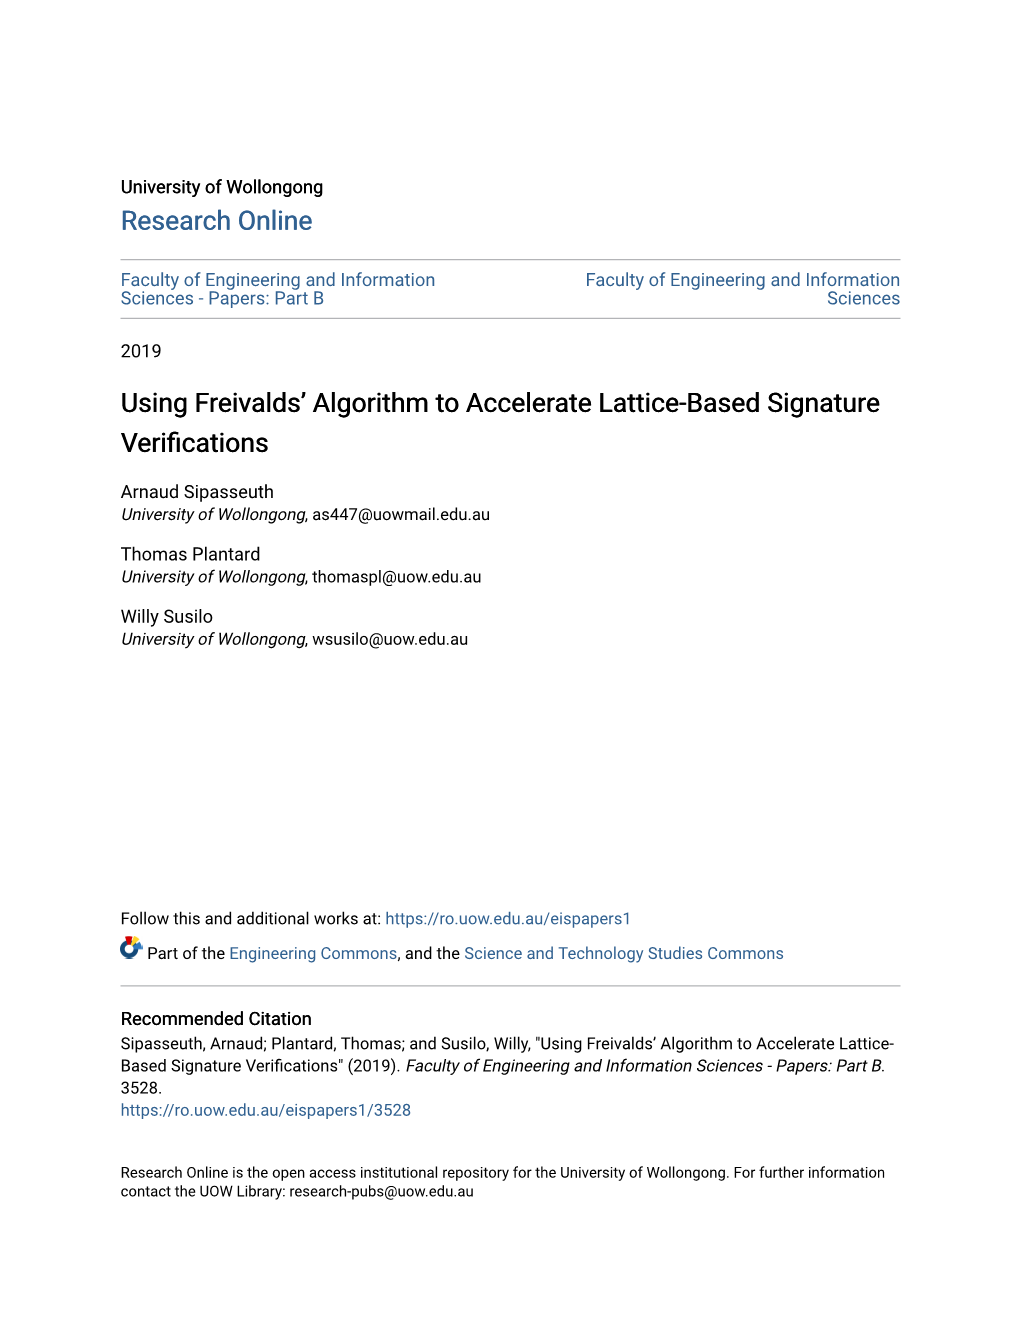 Using Freivalds' Algorithm to Accelerate Lattice-Based Signature